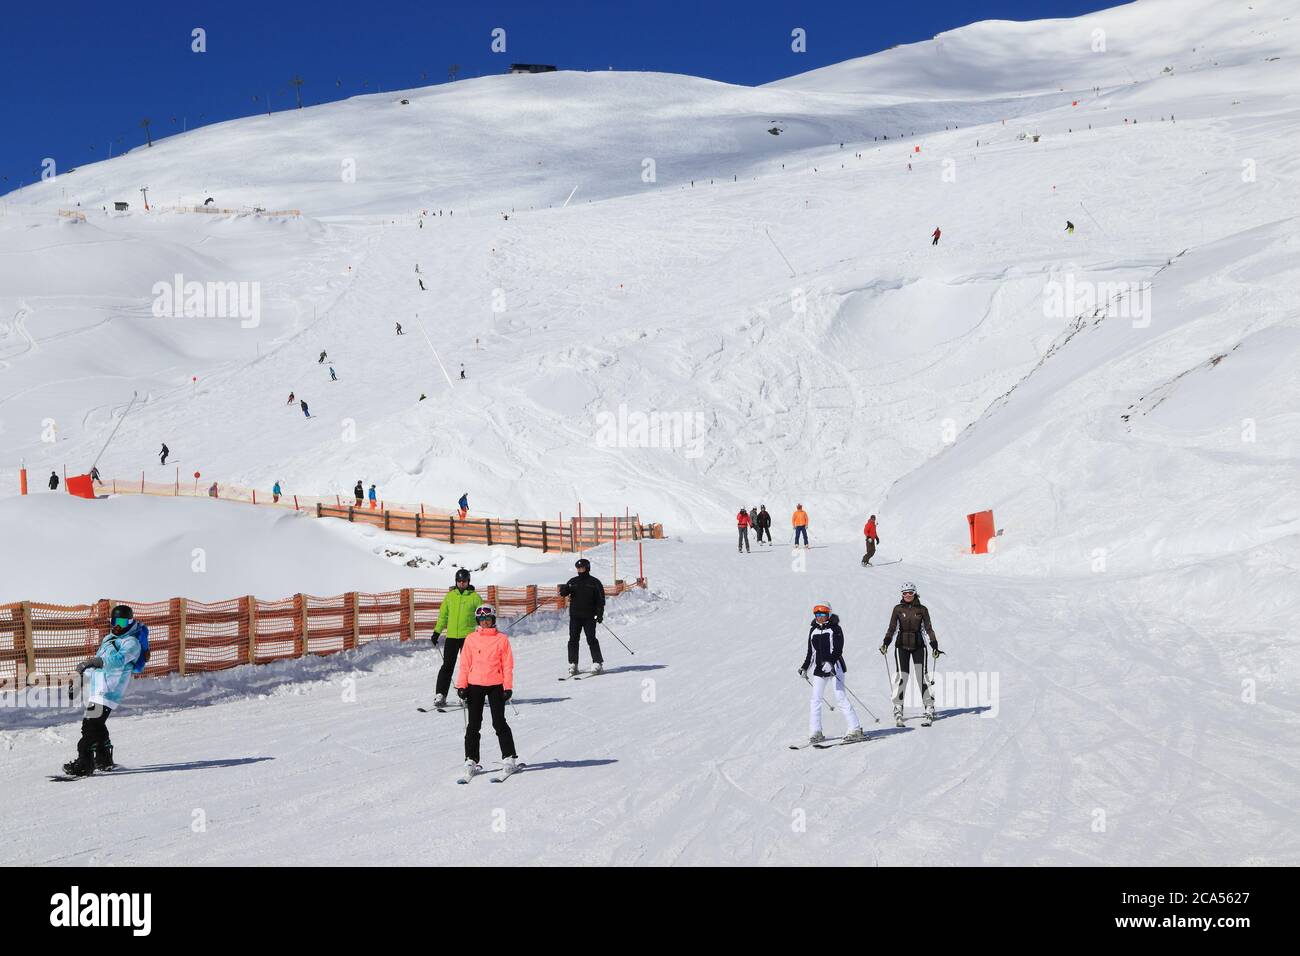 MAYRHOFEN, AUSTRIA - MARCH 12, 2019: People visit Mayrhofen ski resort in Tyrol region, Austria. The resort is located in Zillertal valley of Central Stock Photo